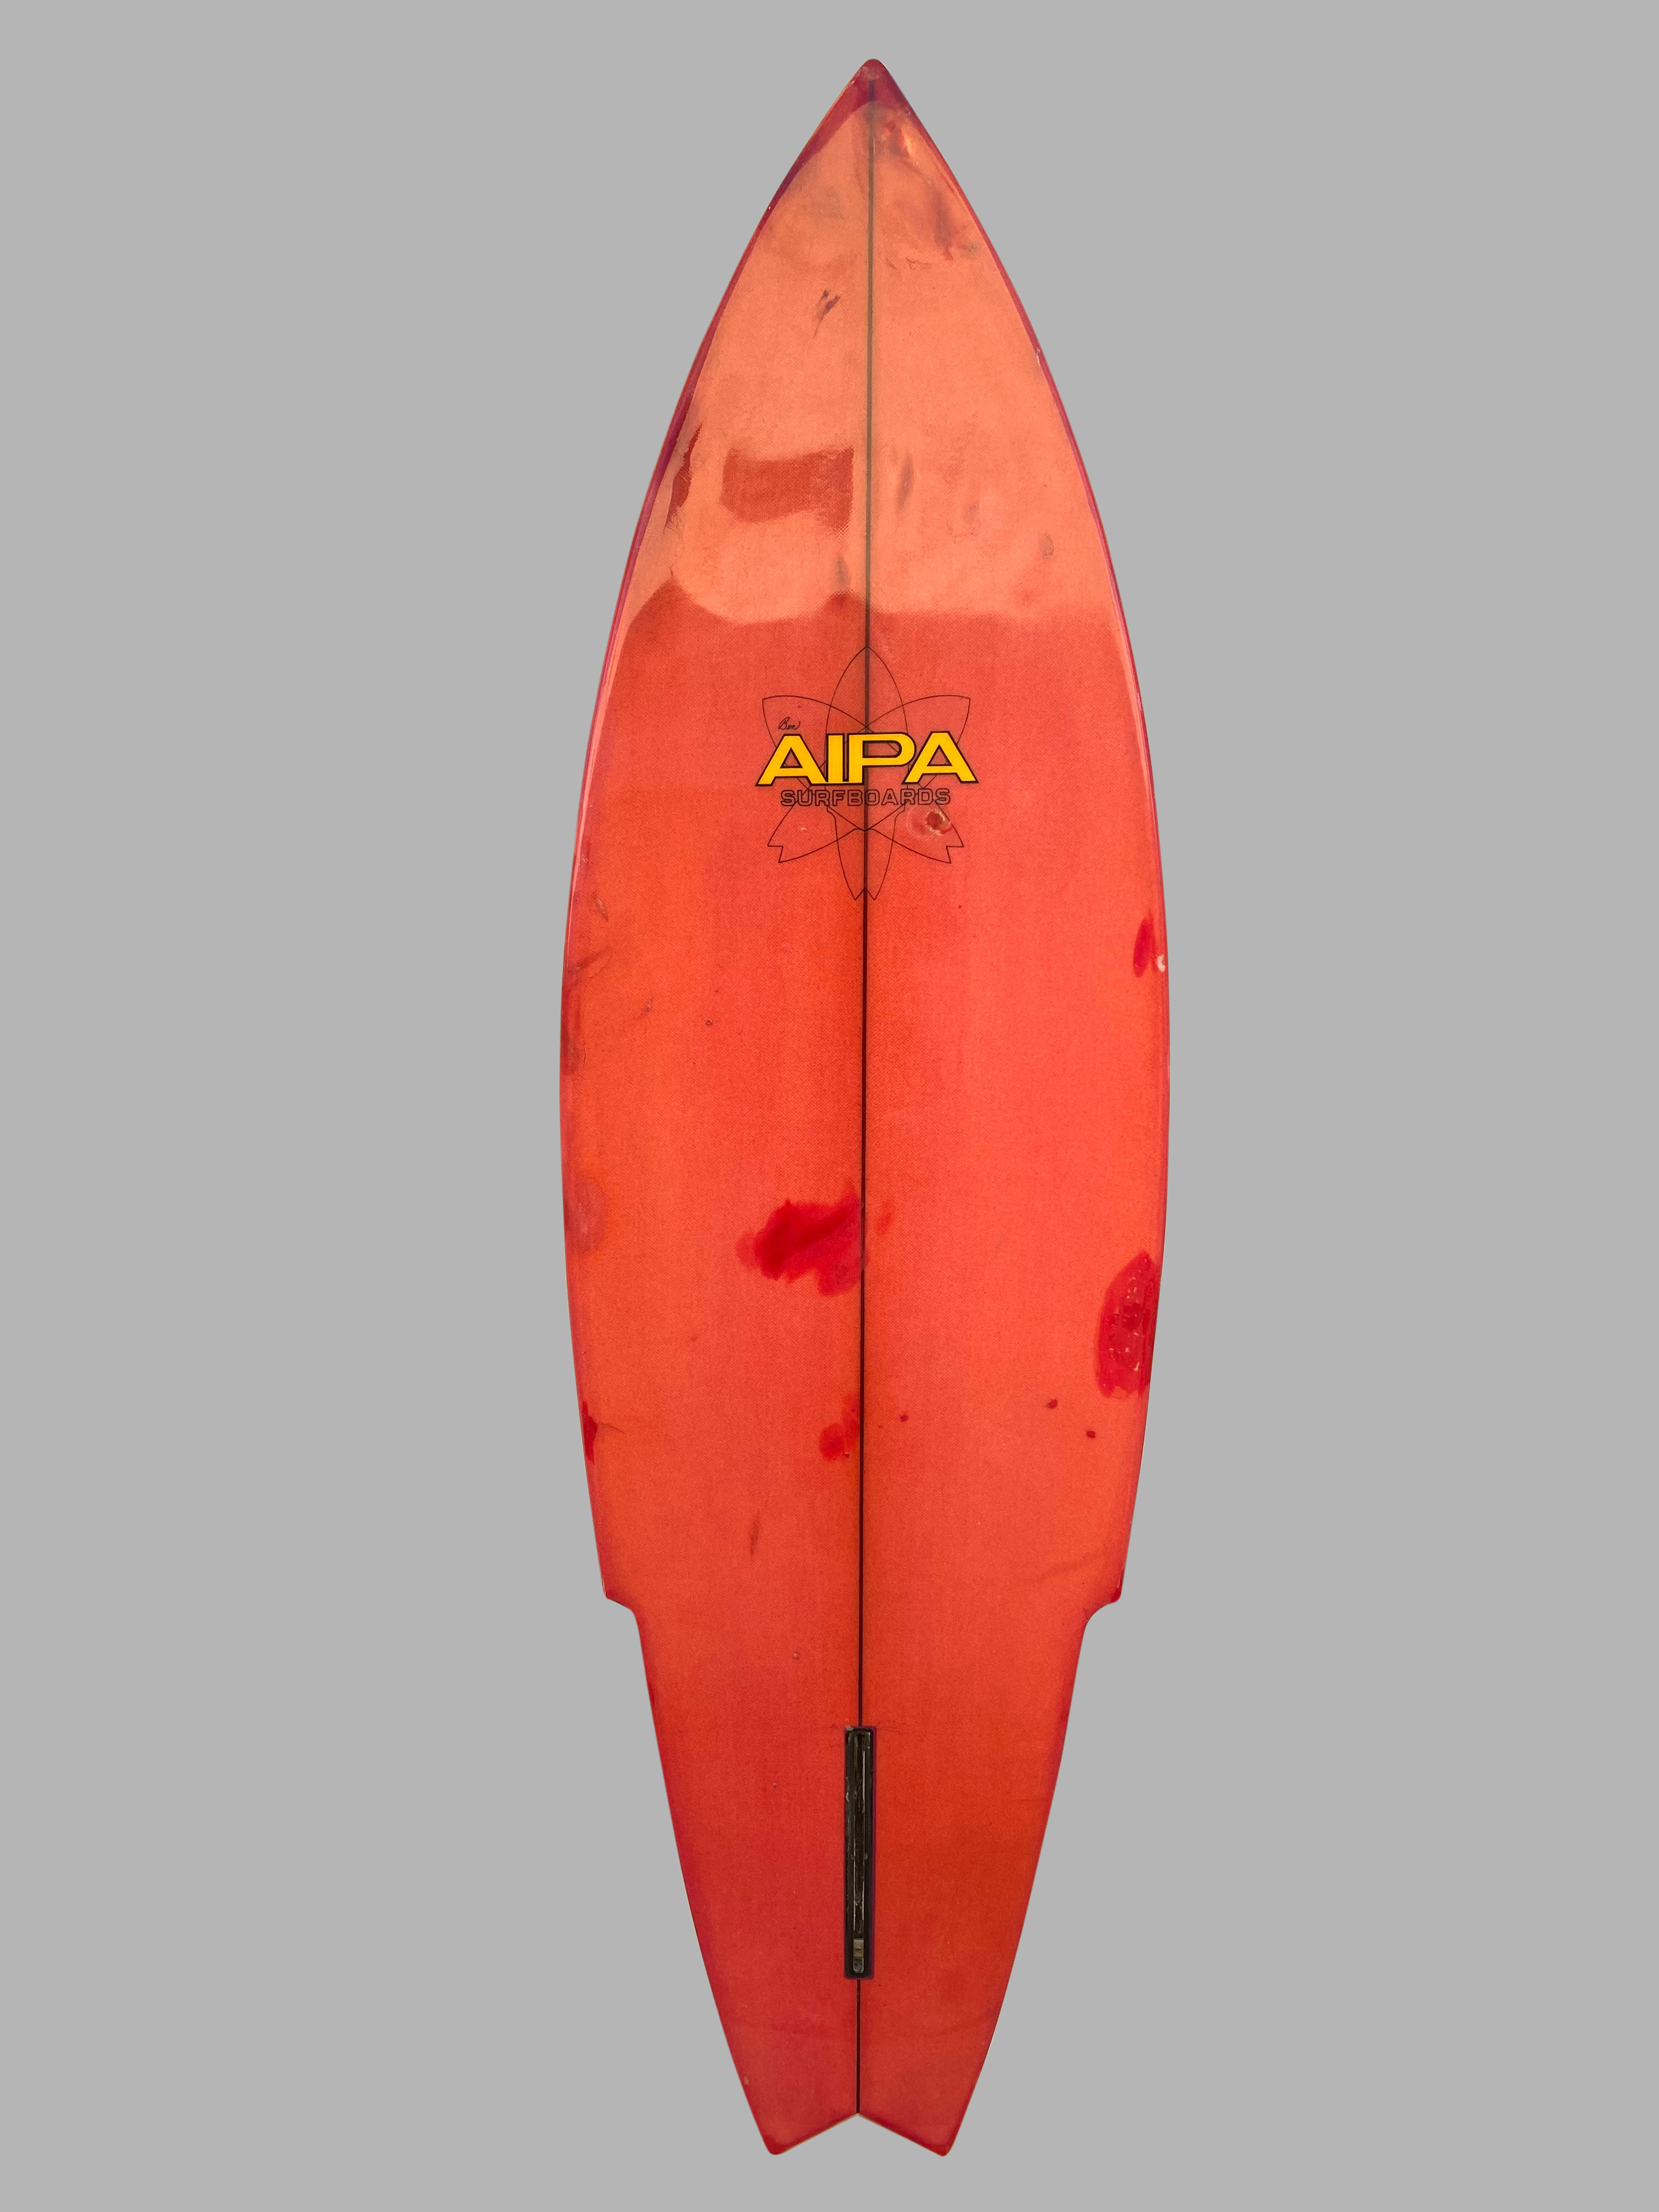 1975 Ben Aipa Sting Surfline Hawaii | California Gold Surf Auction